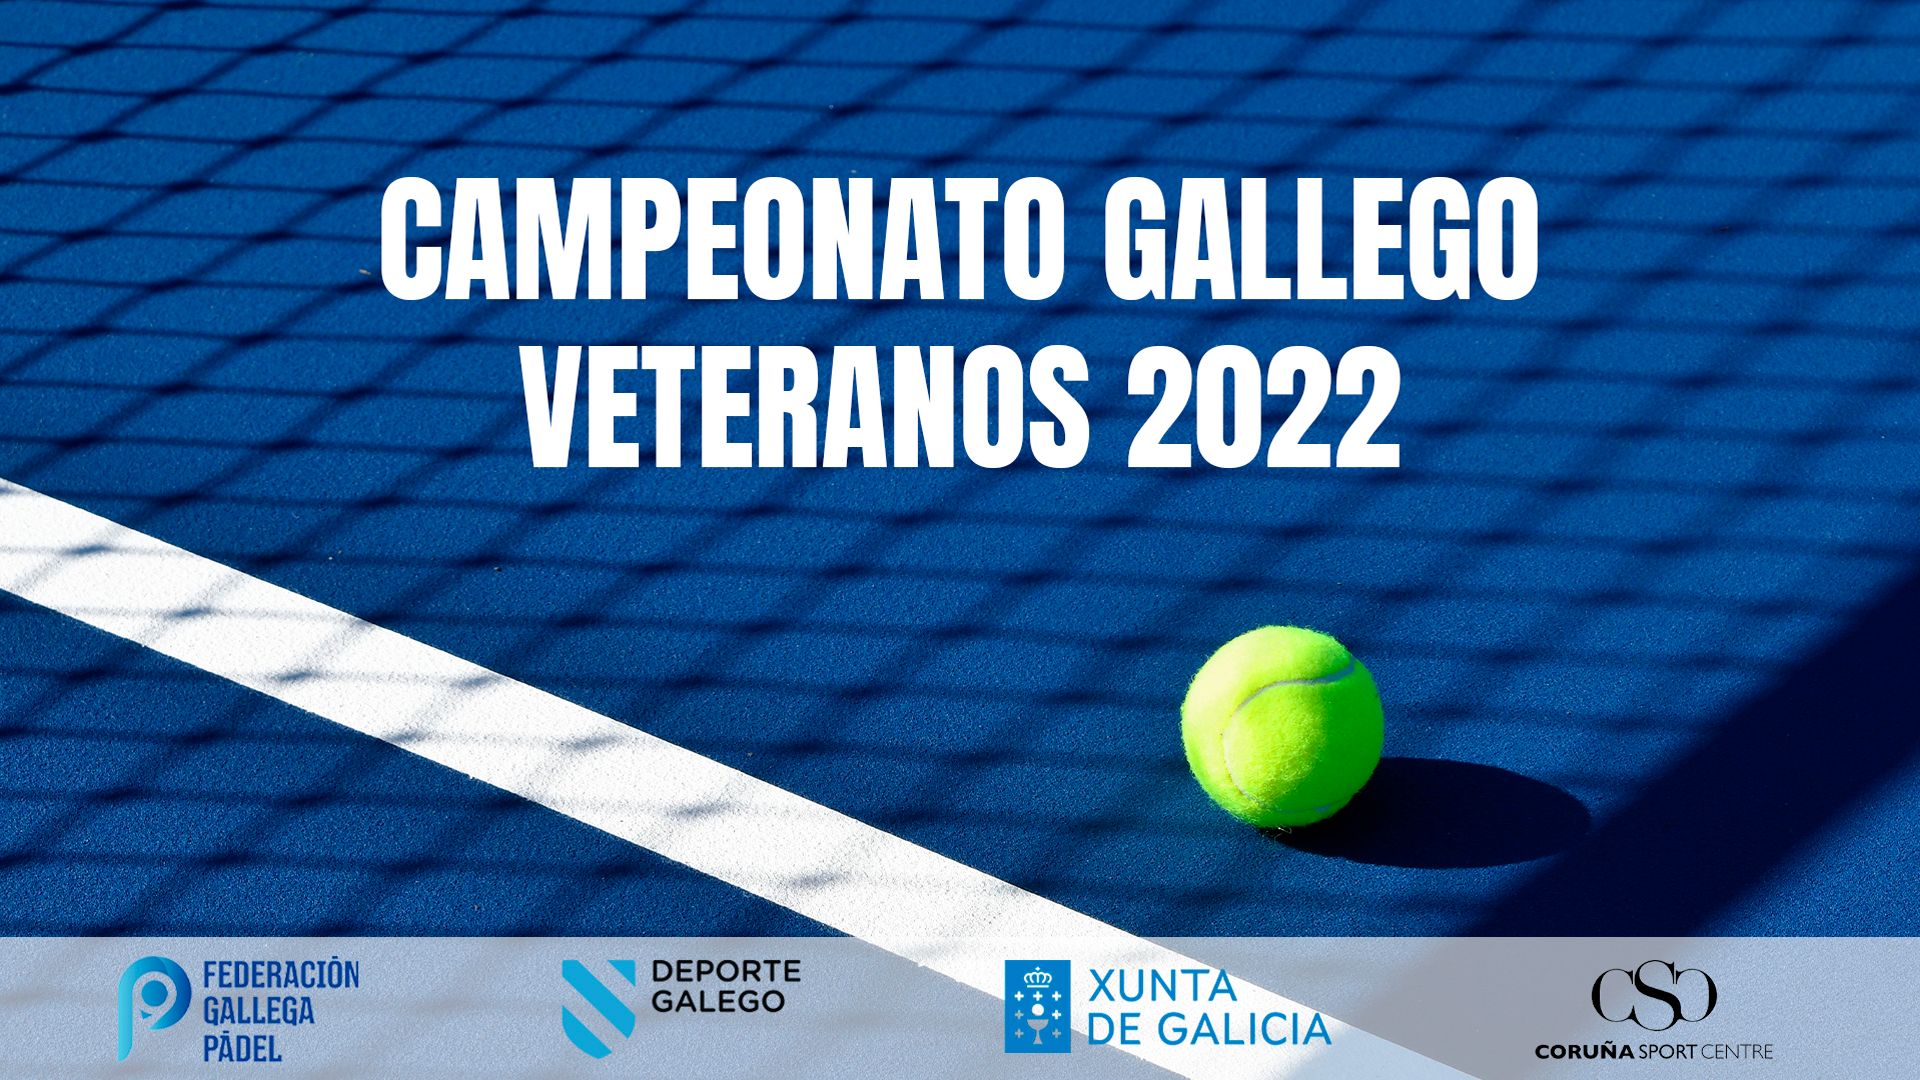 Campeonato Gallego Veteranos 2022